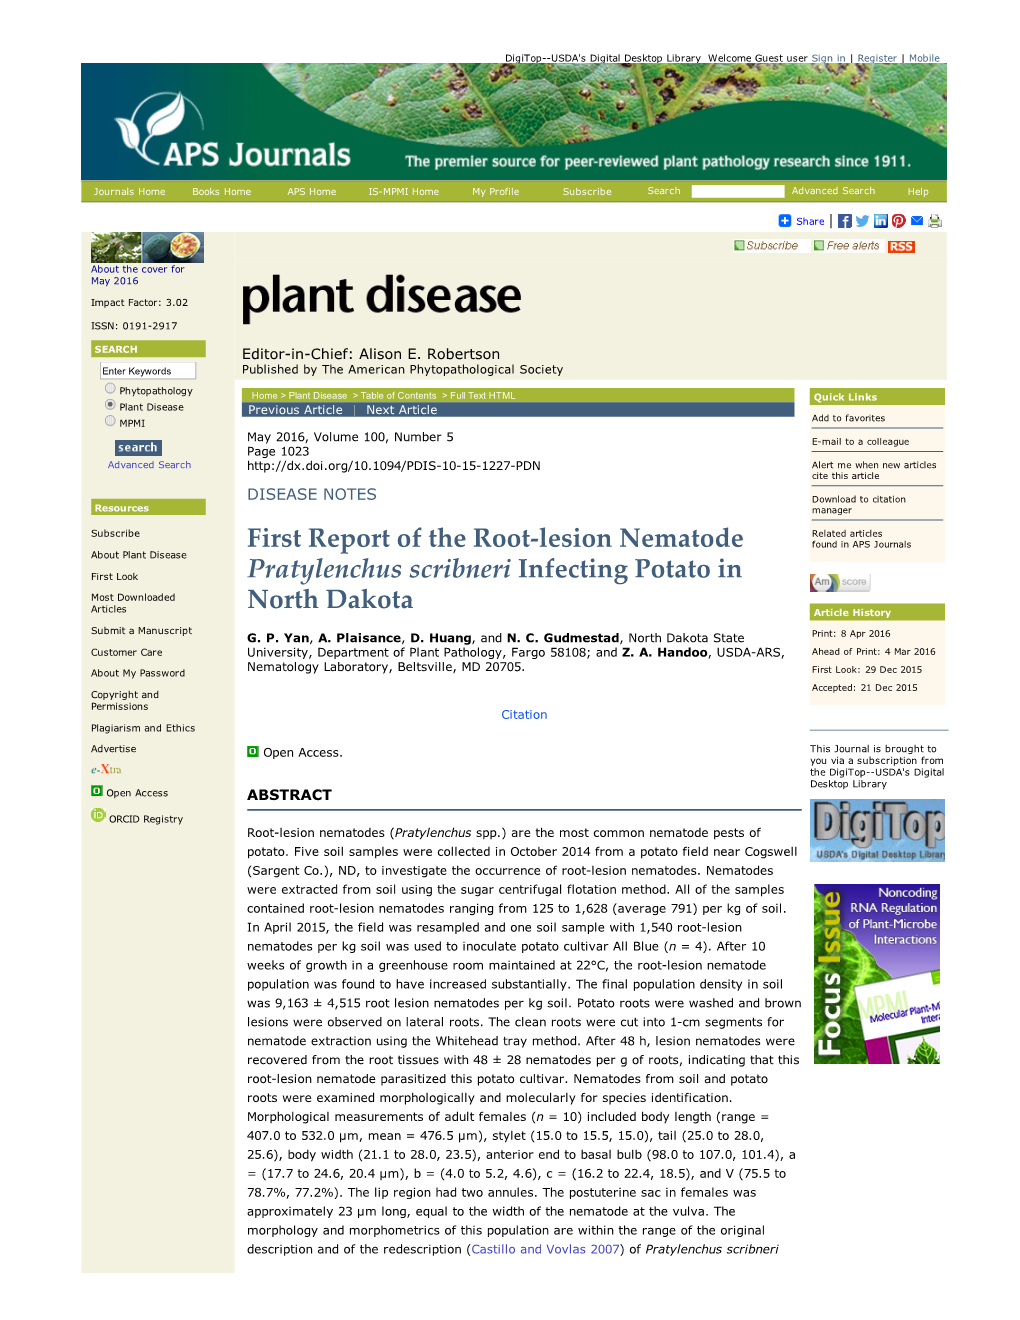 First Report of the Root‑Lesion Nematode Pratylenchus Scribneri